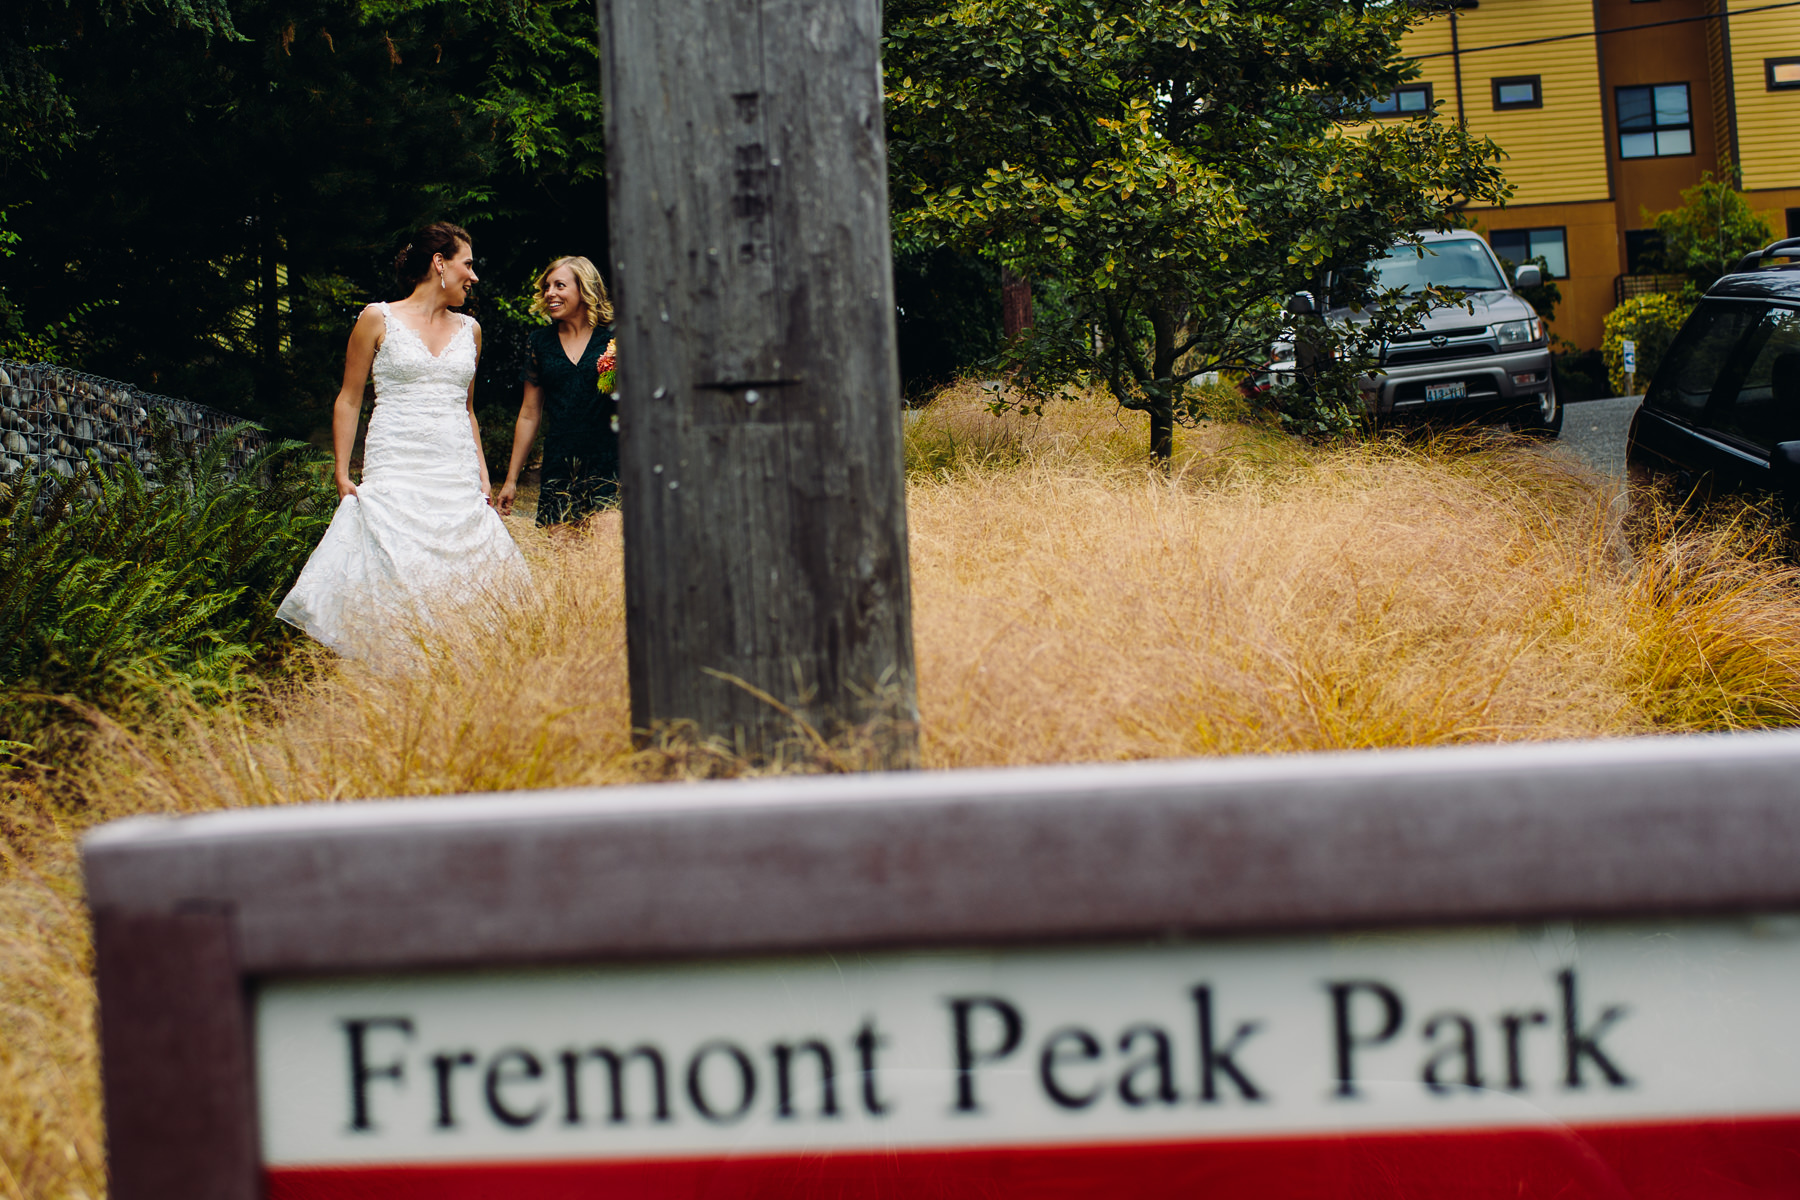 Fremont peak park first look